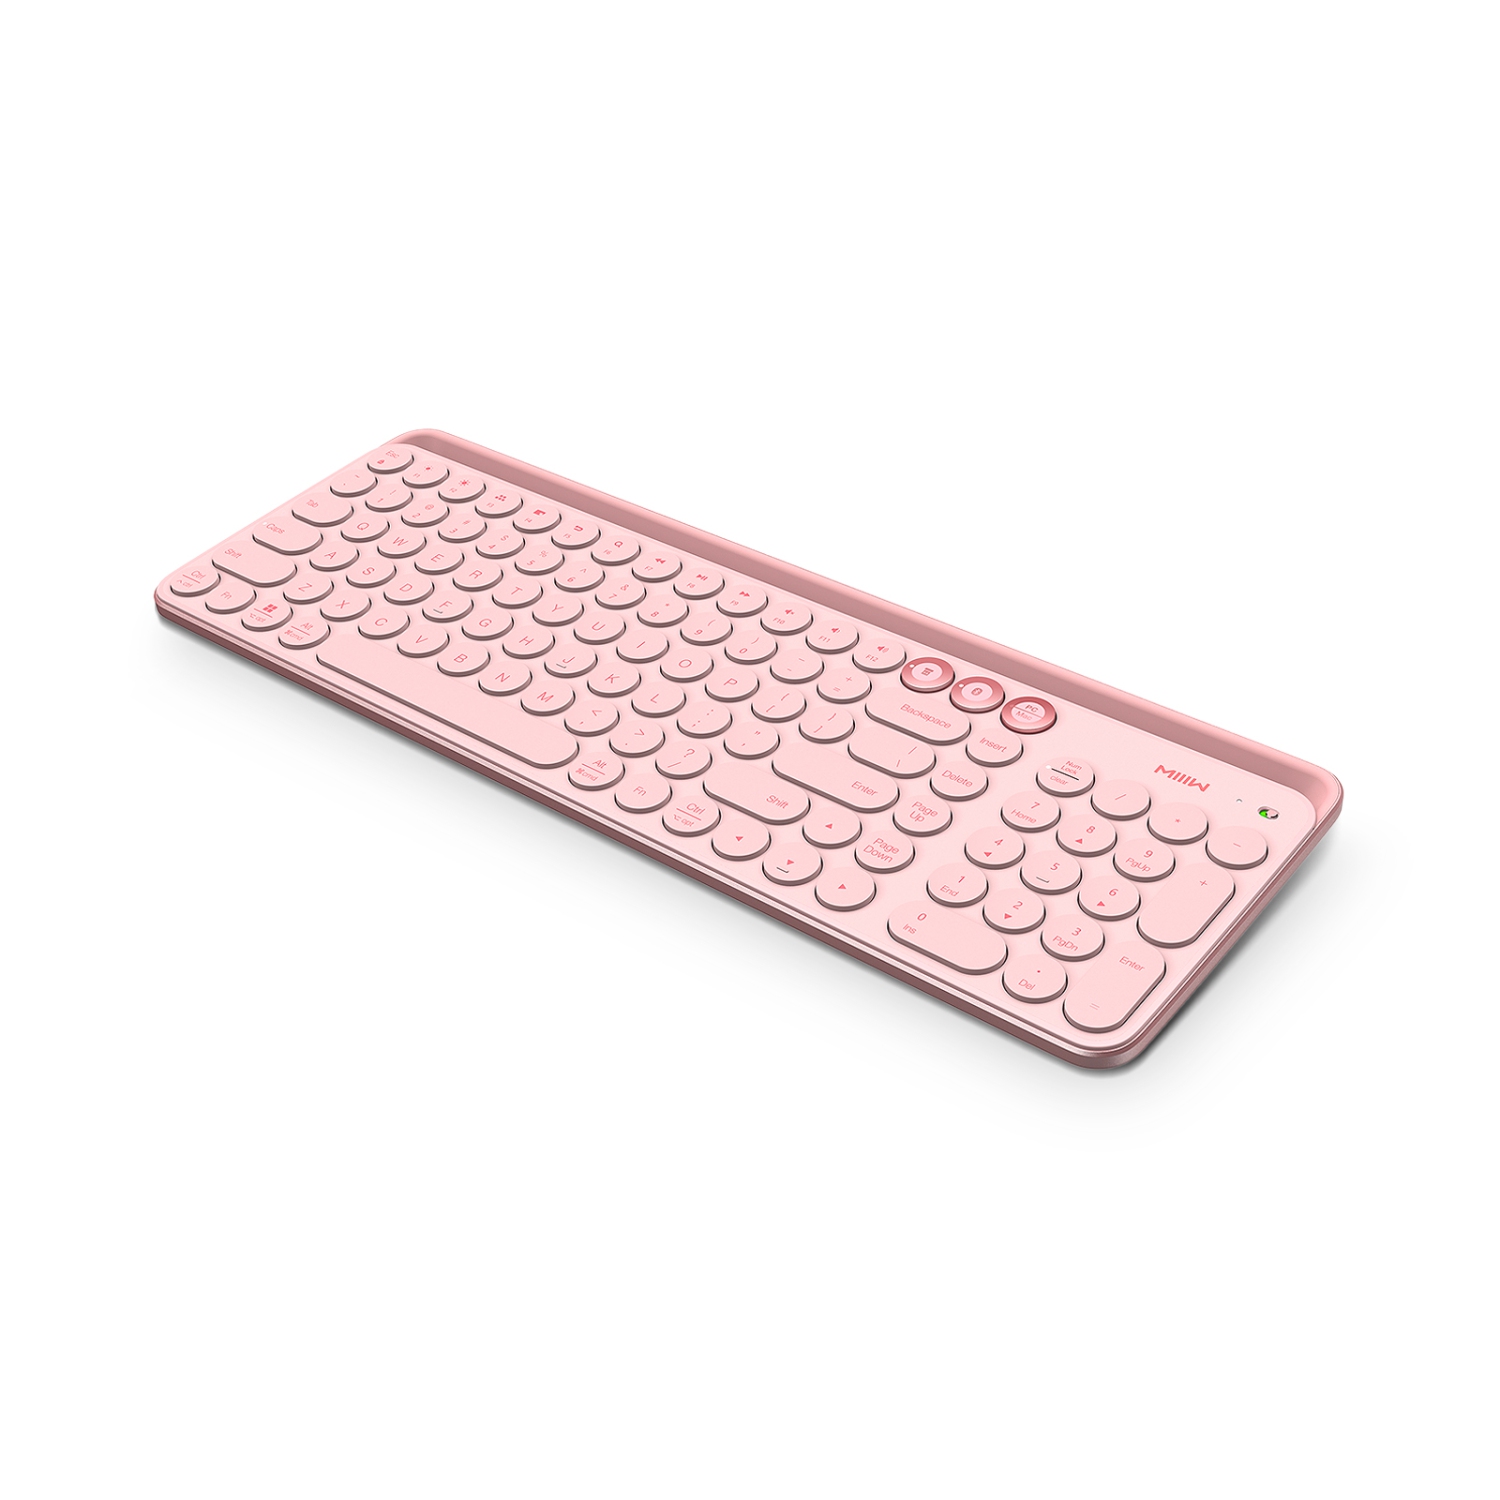 XIAOMI MIIIW K02 Dual-Mode Wireless Bluetooth Universal Keyboard, Scissor Switch, 102-Key, Sakura Pink